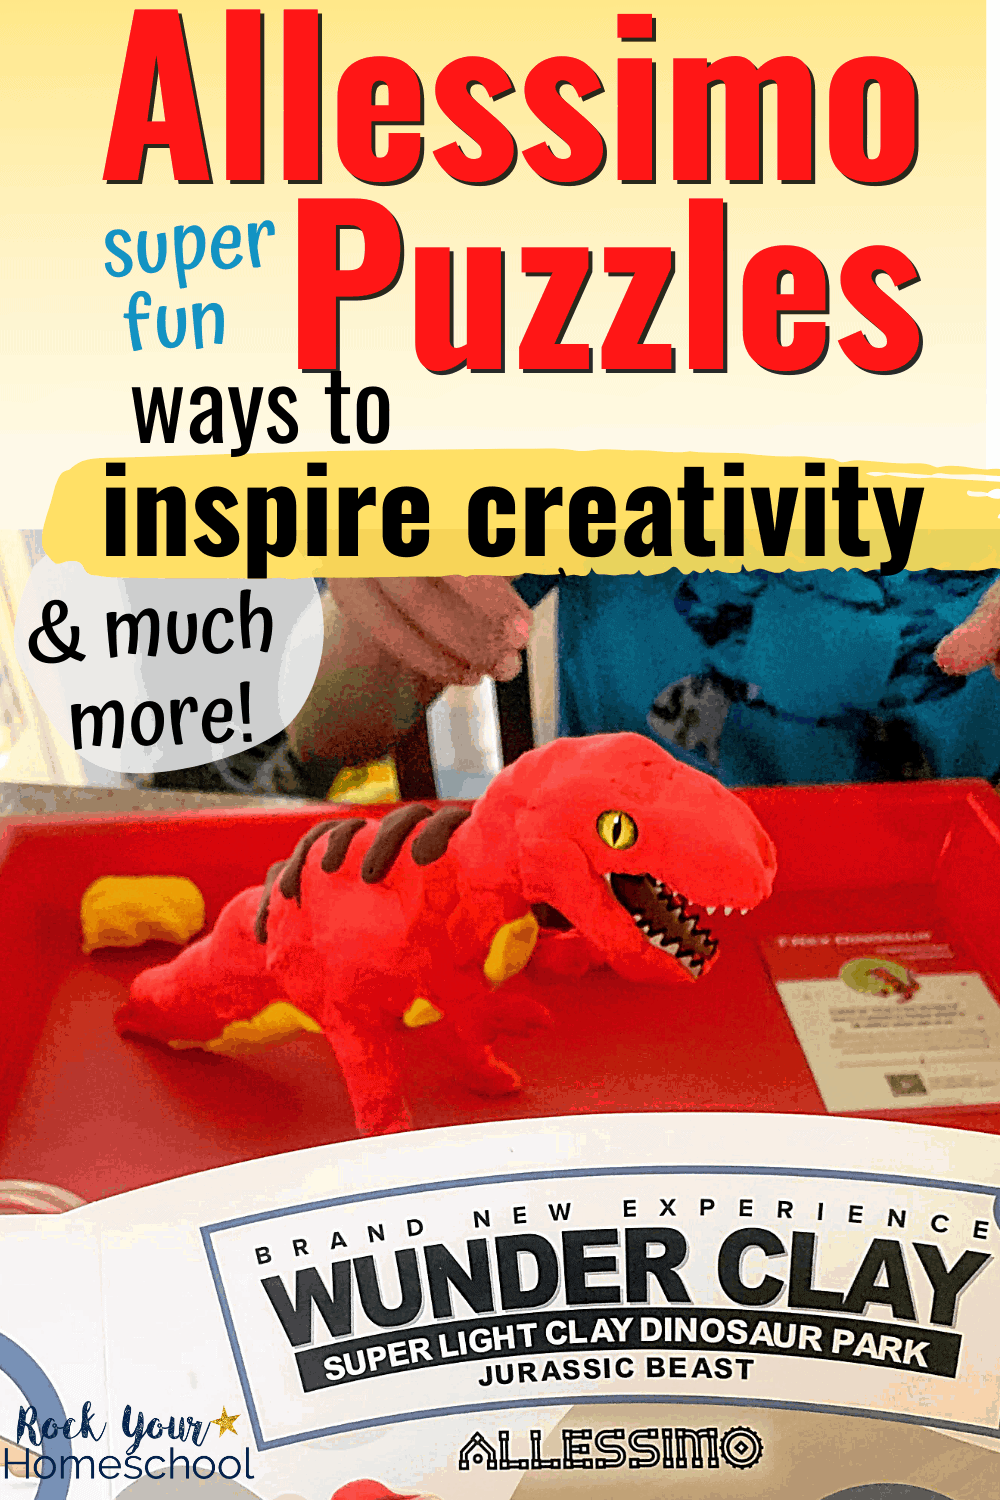 Allessimo Puzzles: Super Fun Ways to Inspire Creativity & More